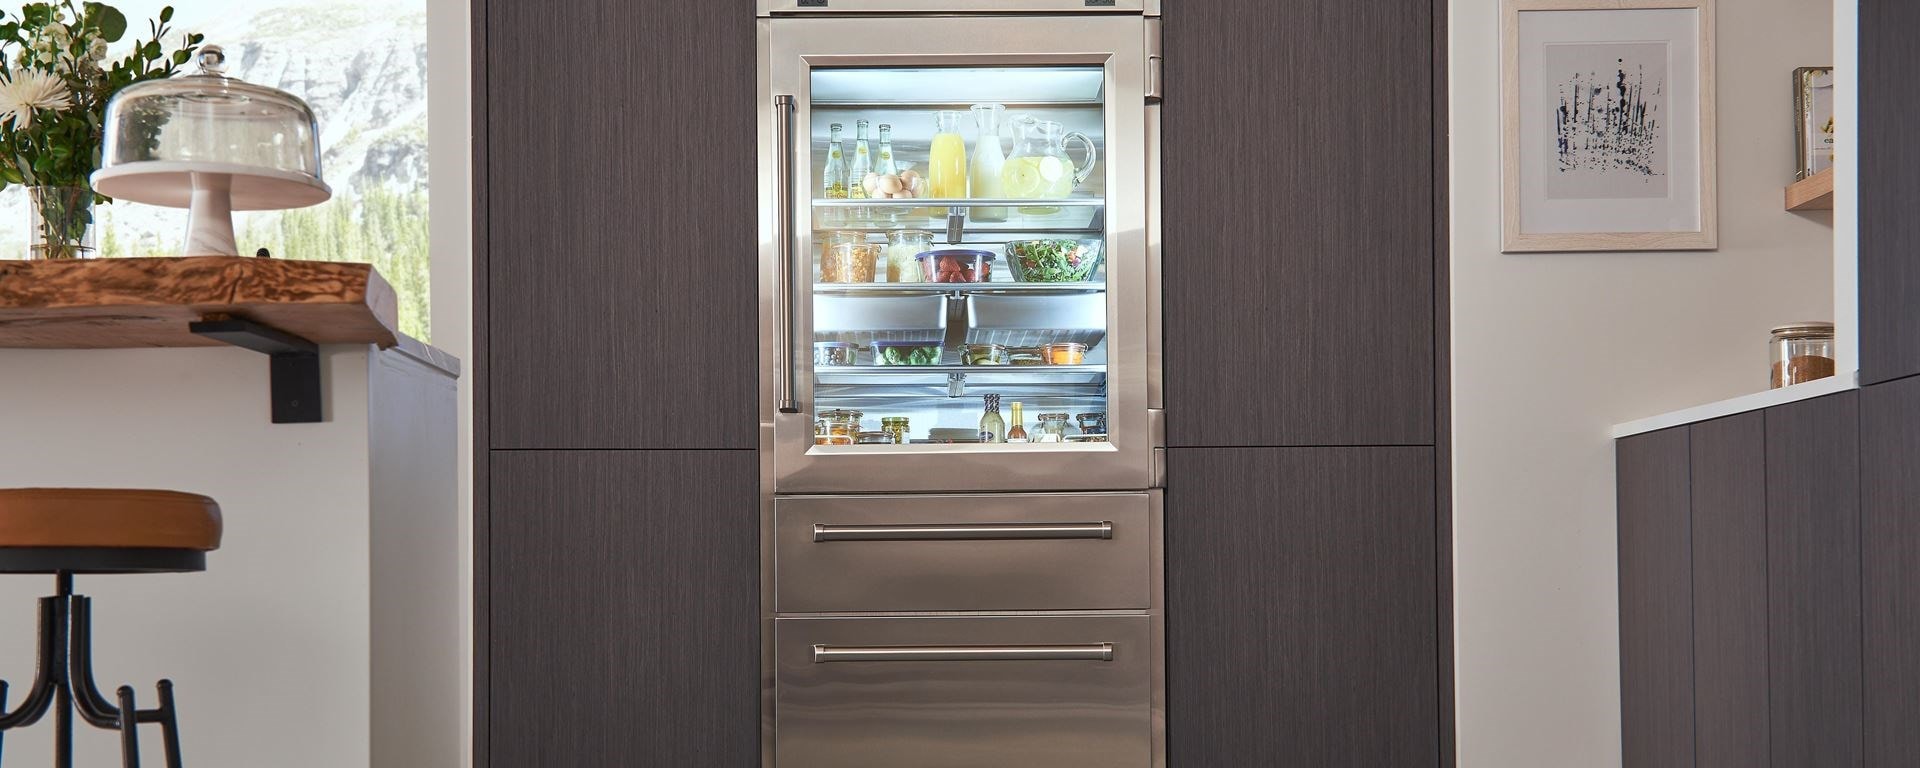 Sub-Zero Pro Glass Door Refrigerator Freezer set in seamless wood grain kitchen cabinets